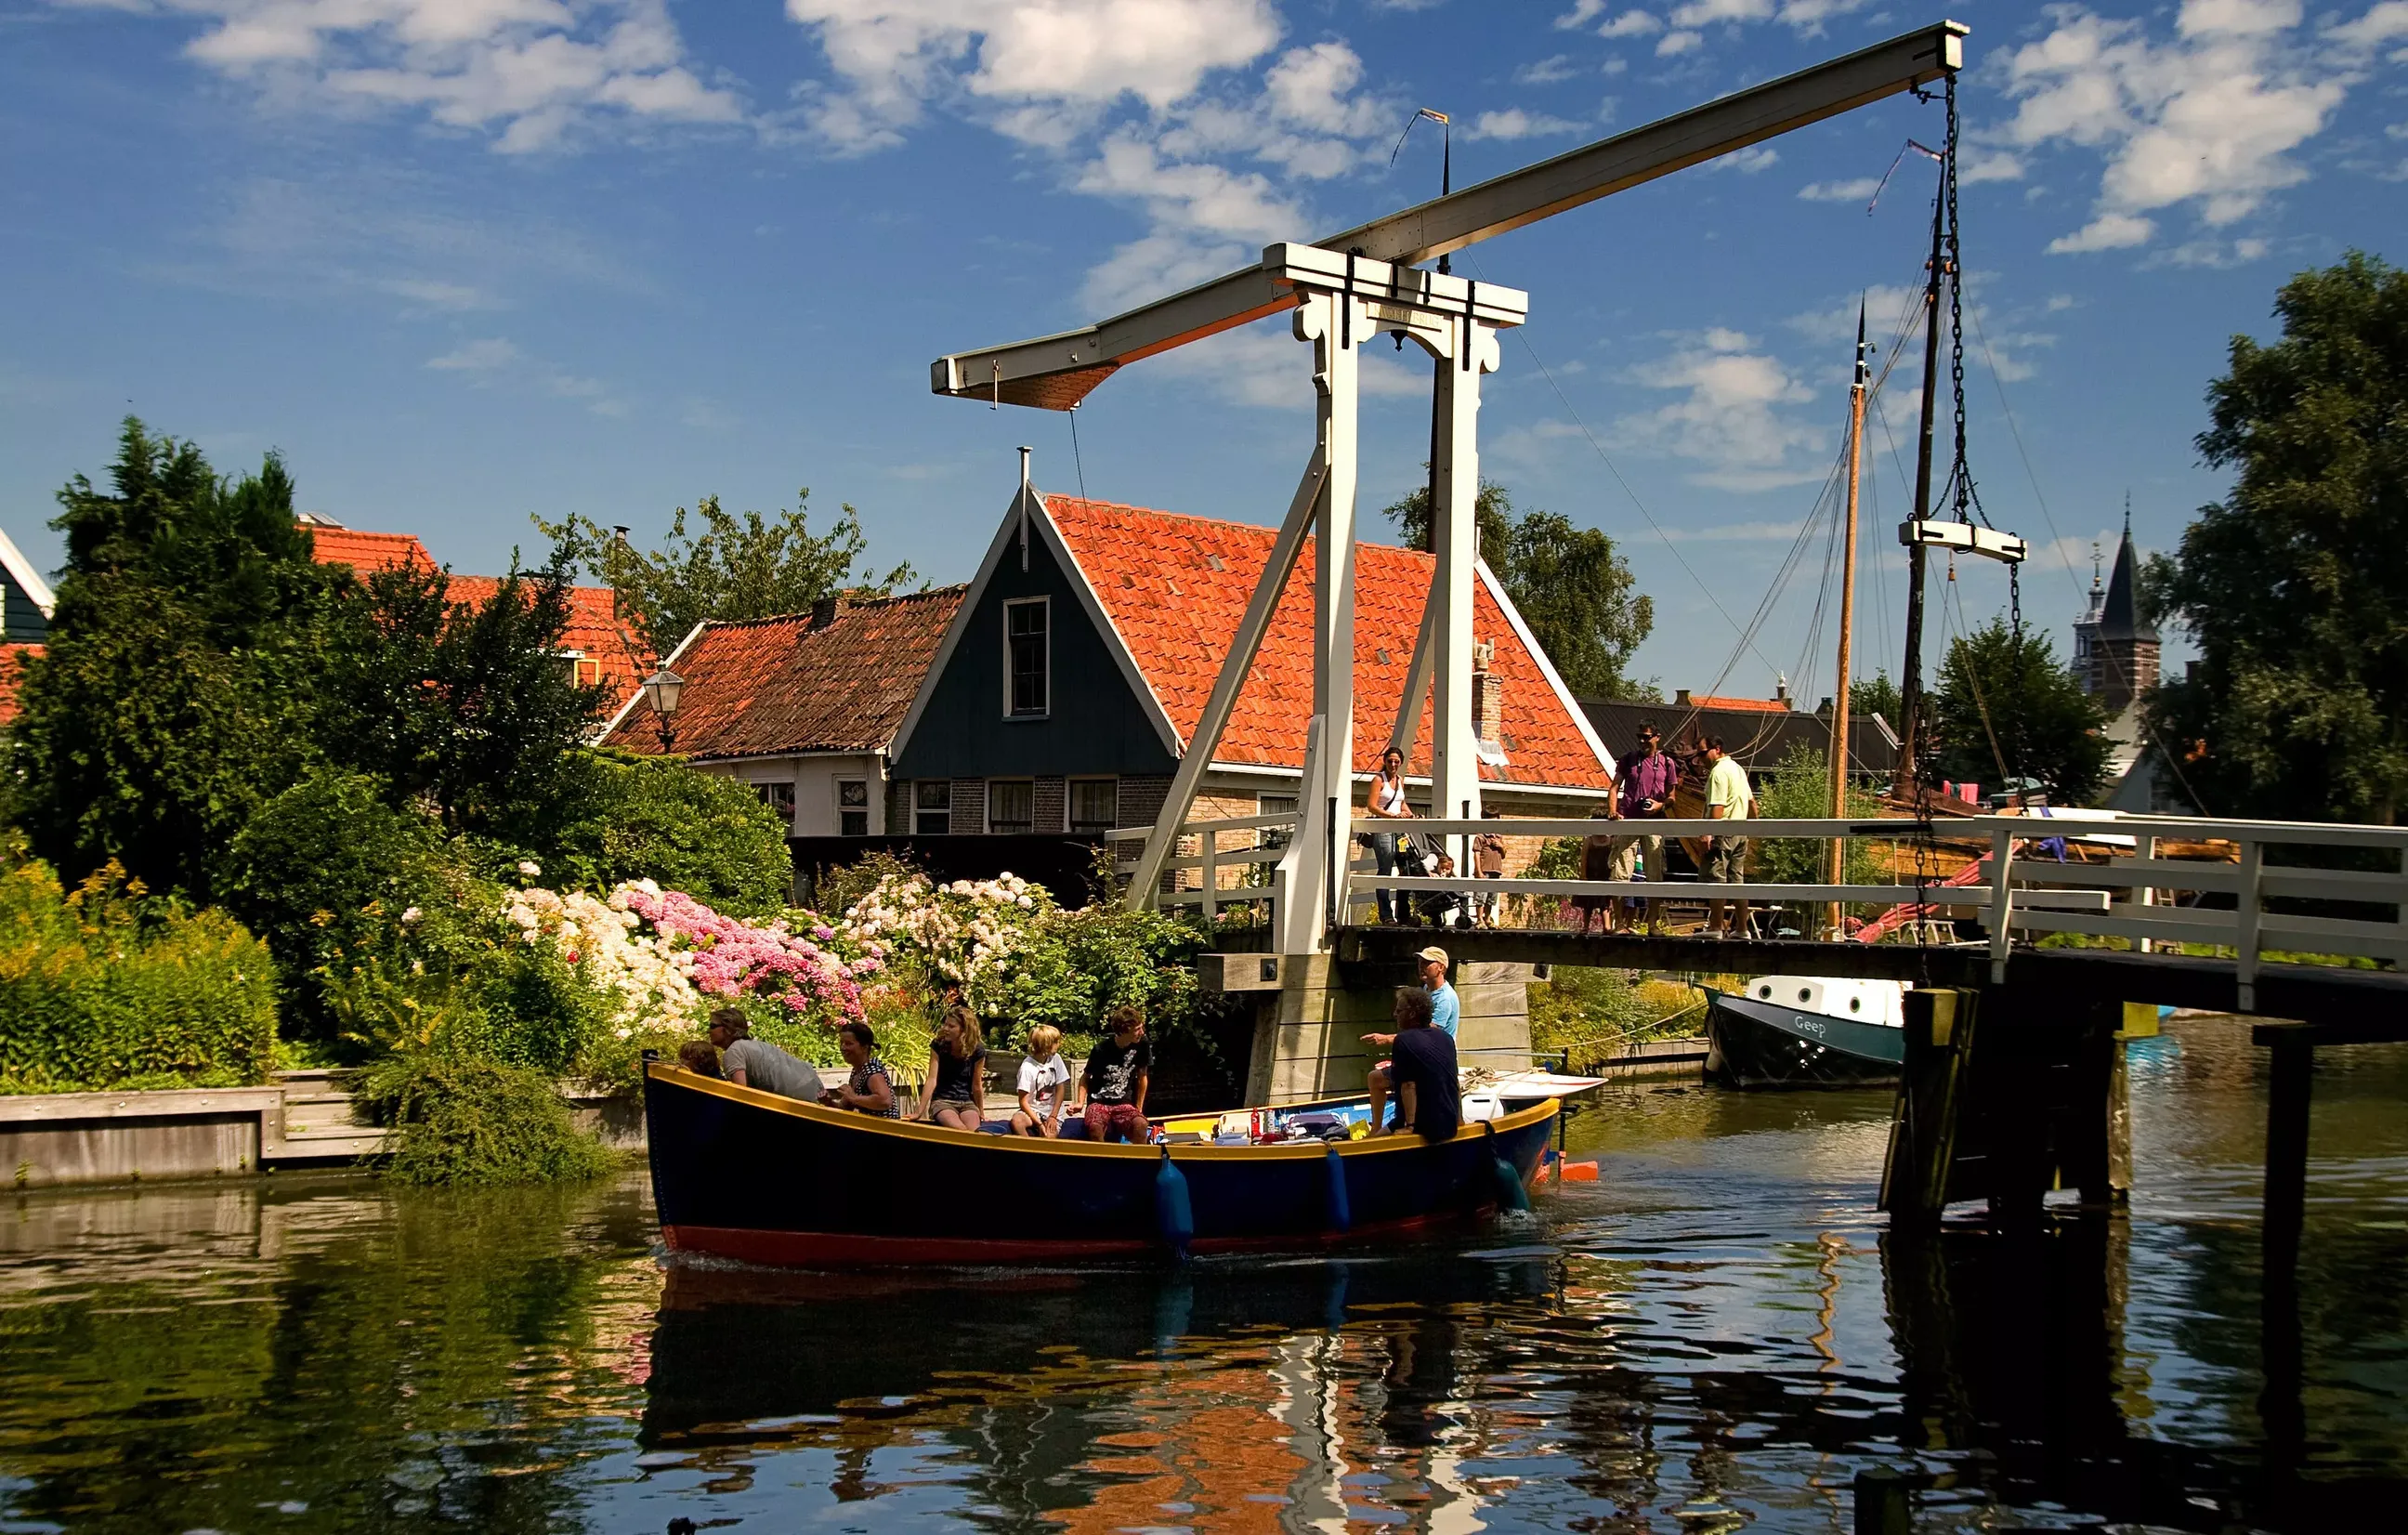 Edam | North Holland Region, Netherlands - Rated 6.9